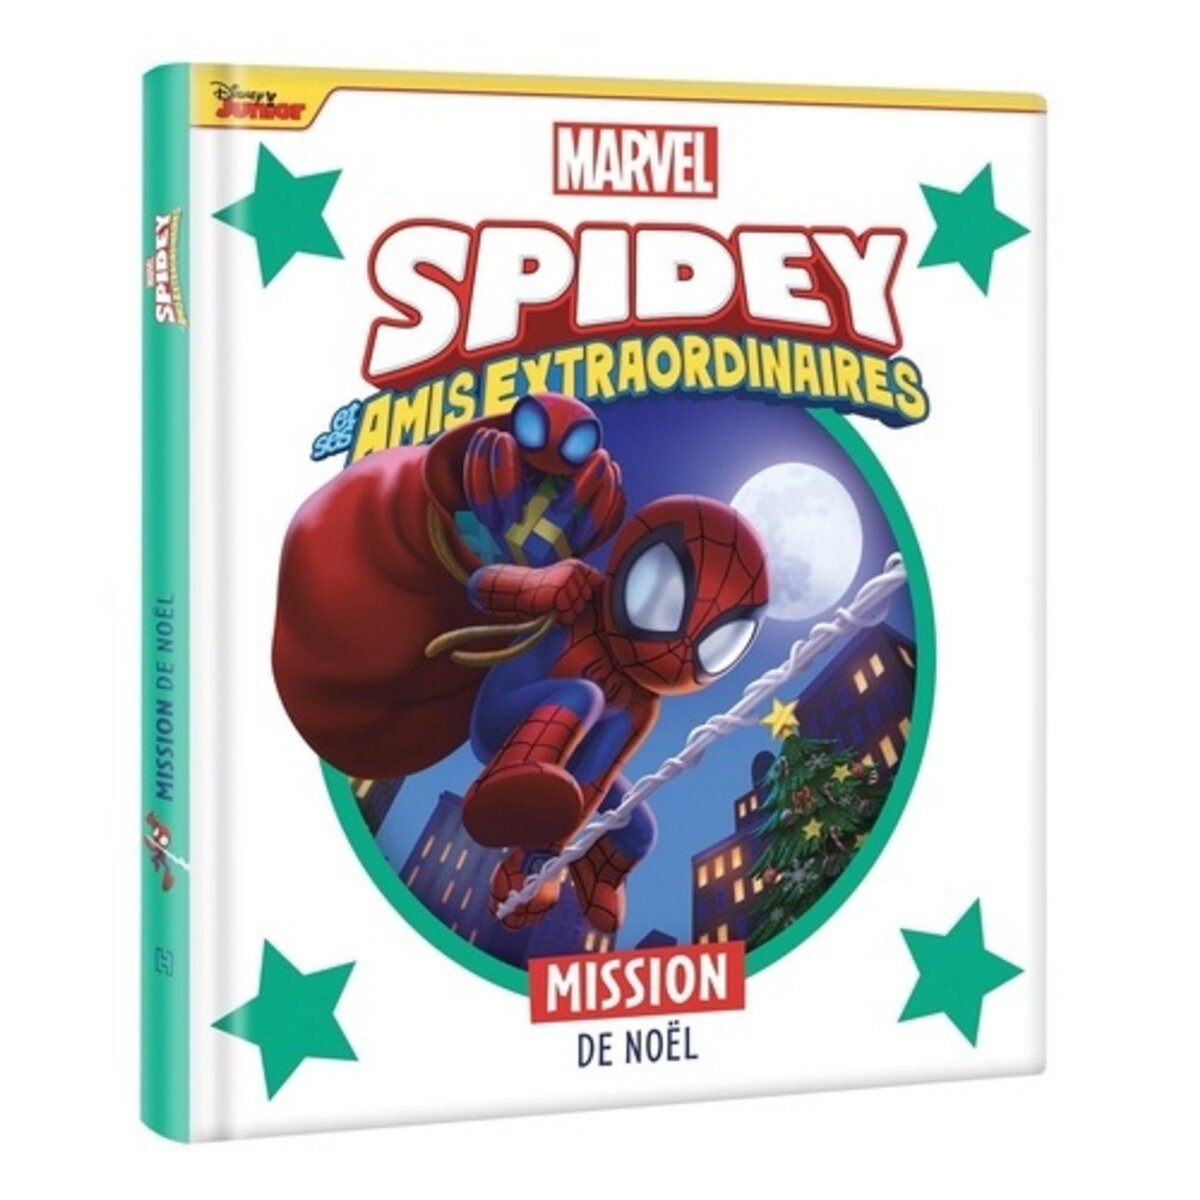 Spidey Et Ses Amis Extraordinaires - Disney - Marvel Spidey et ses